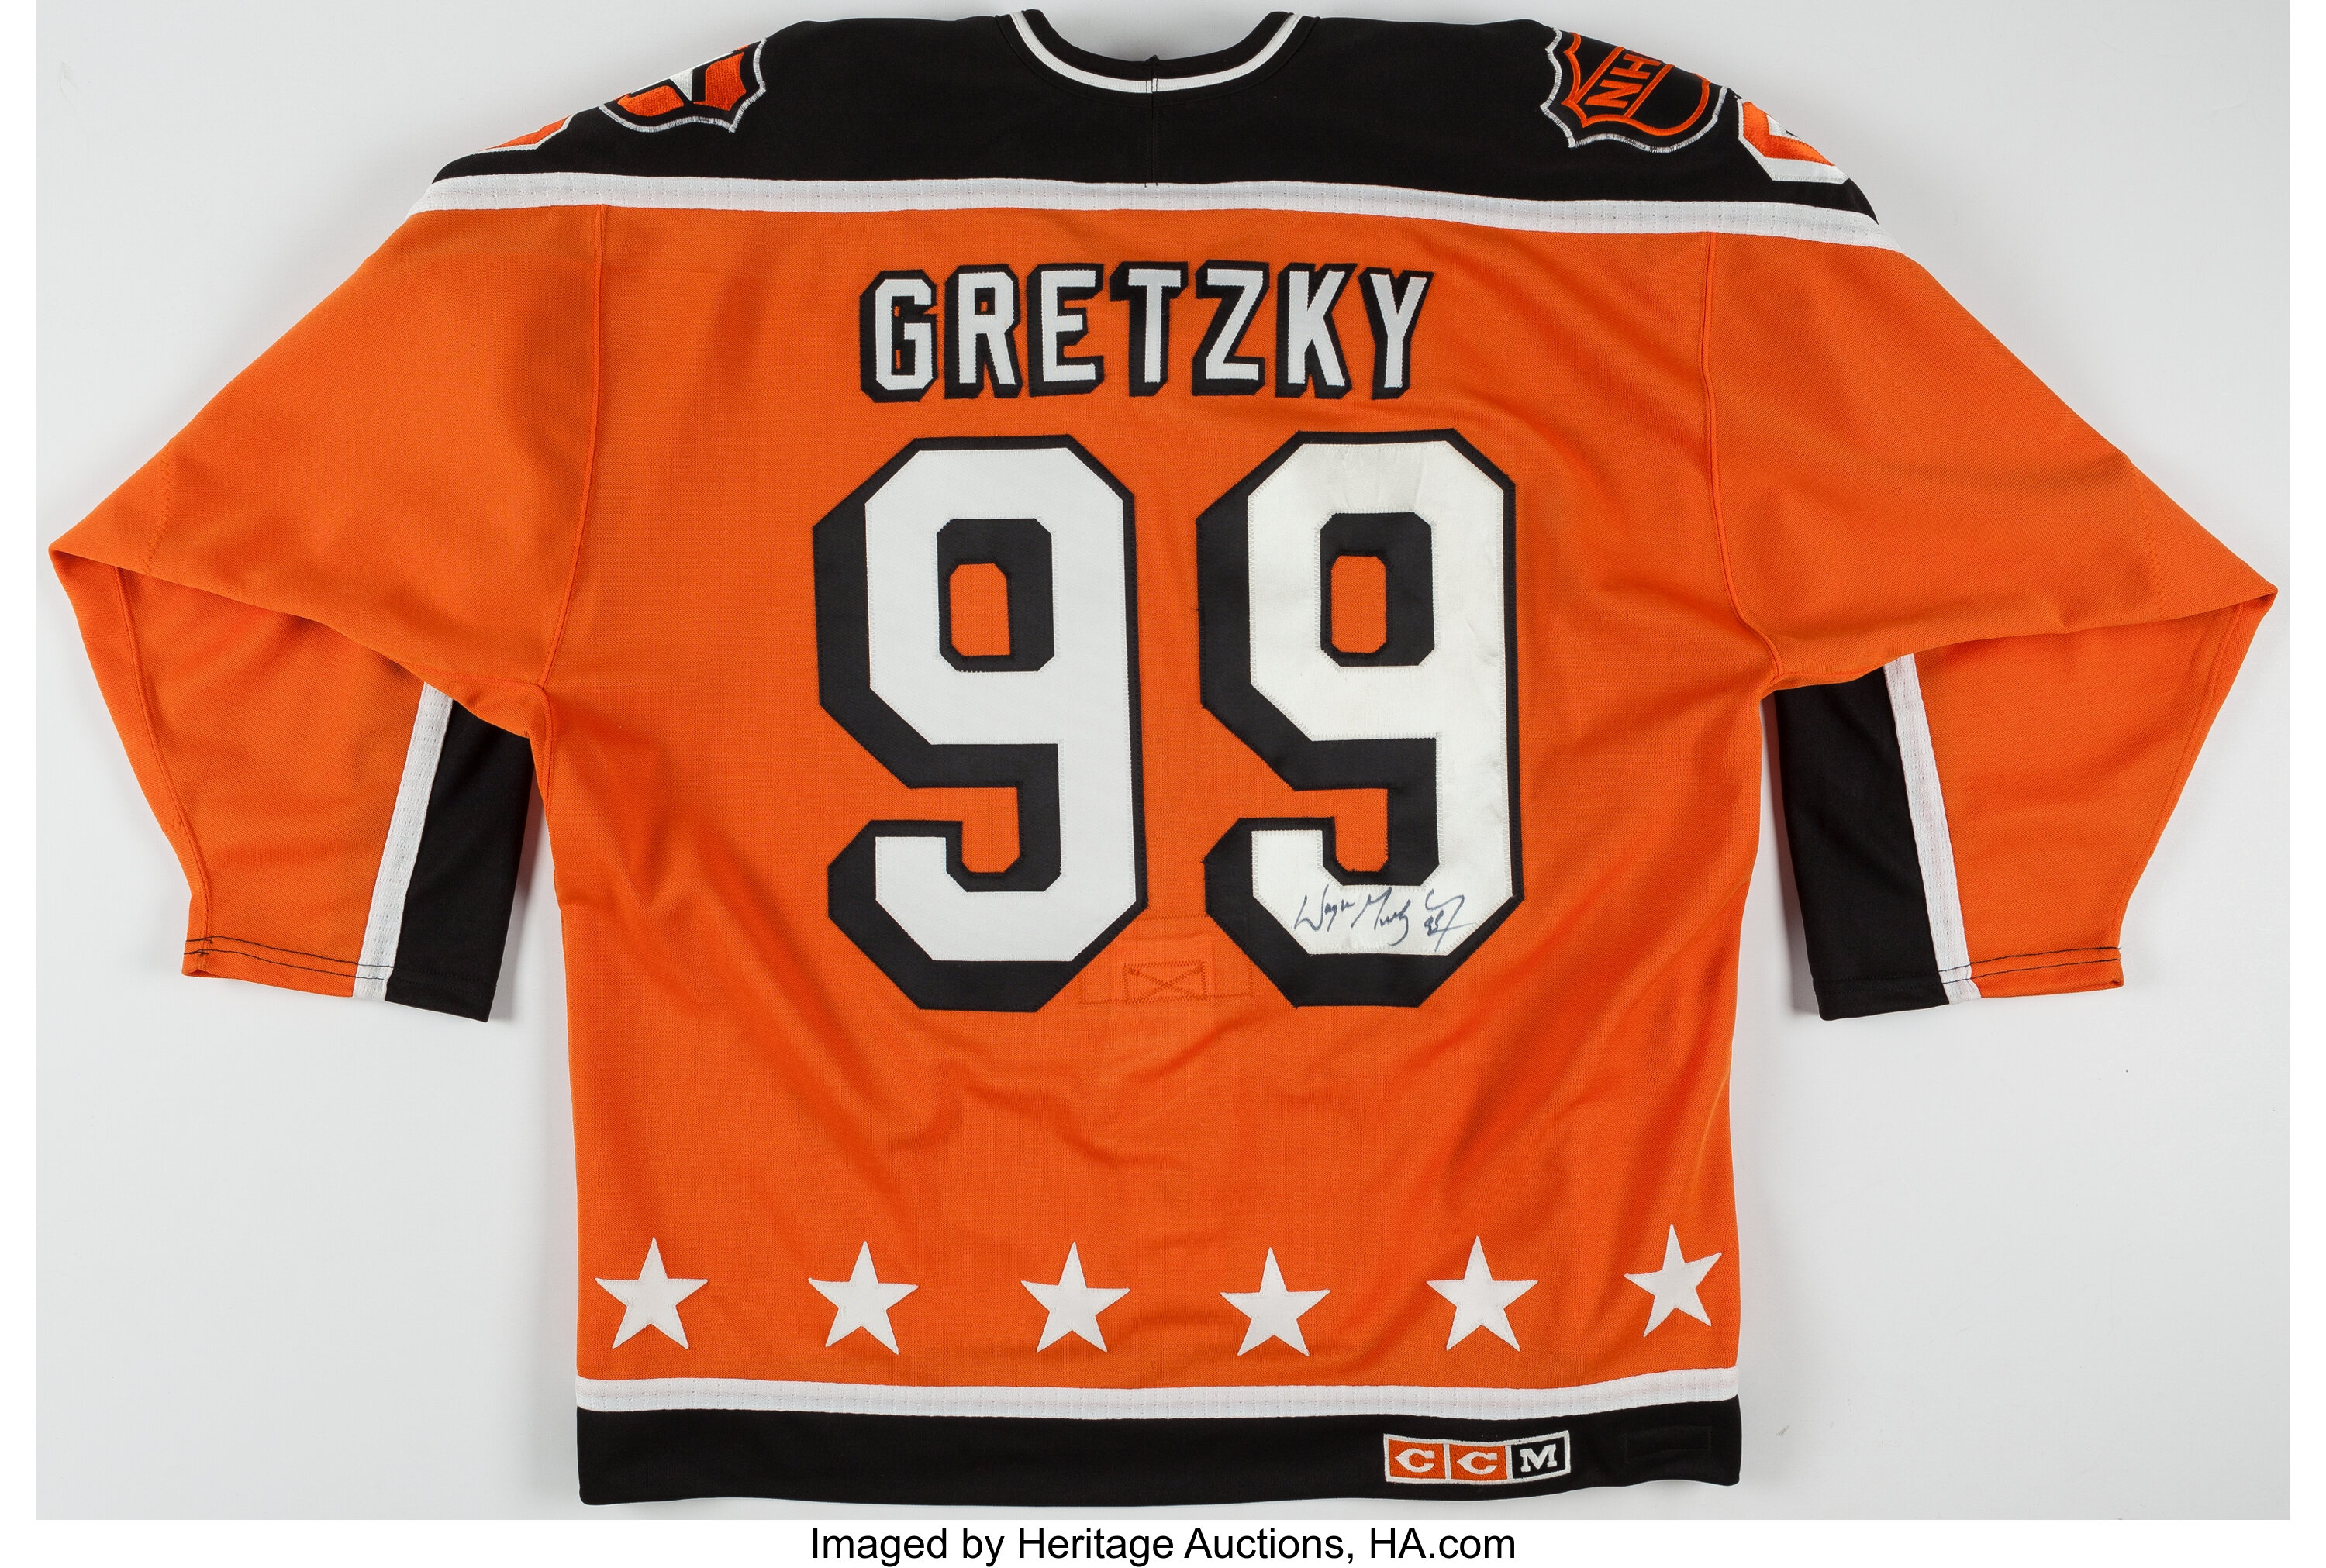 Wayne Gretzky Signed 1980 Nhl All Star Jersey (beckett Loa) Auction